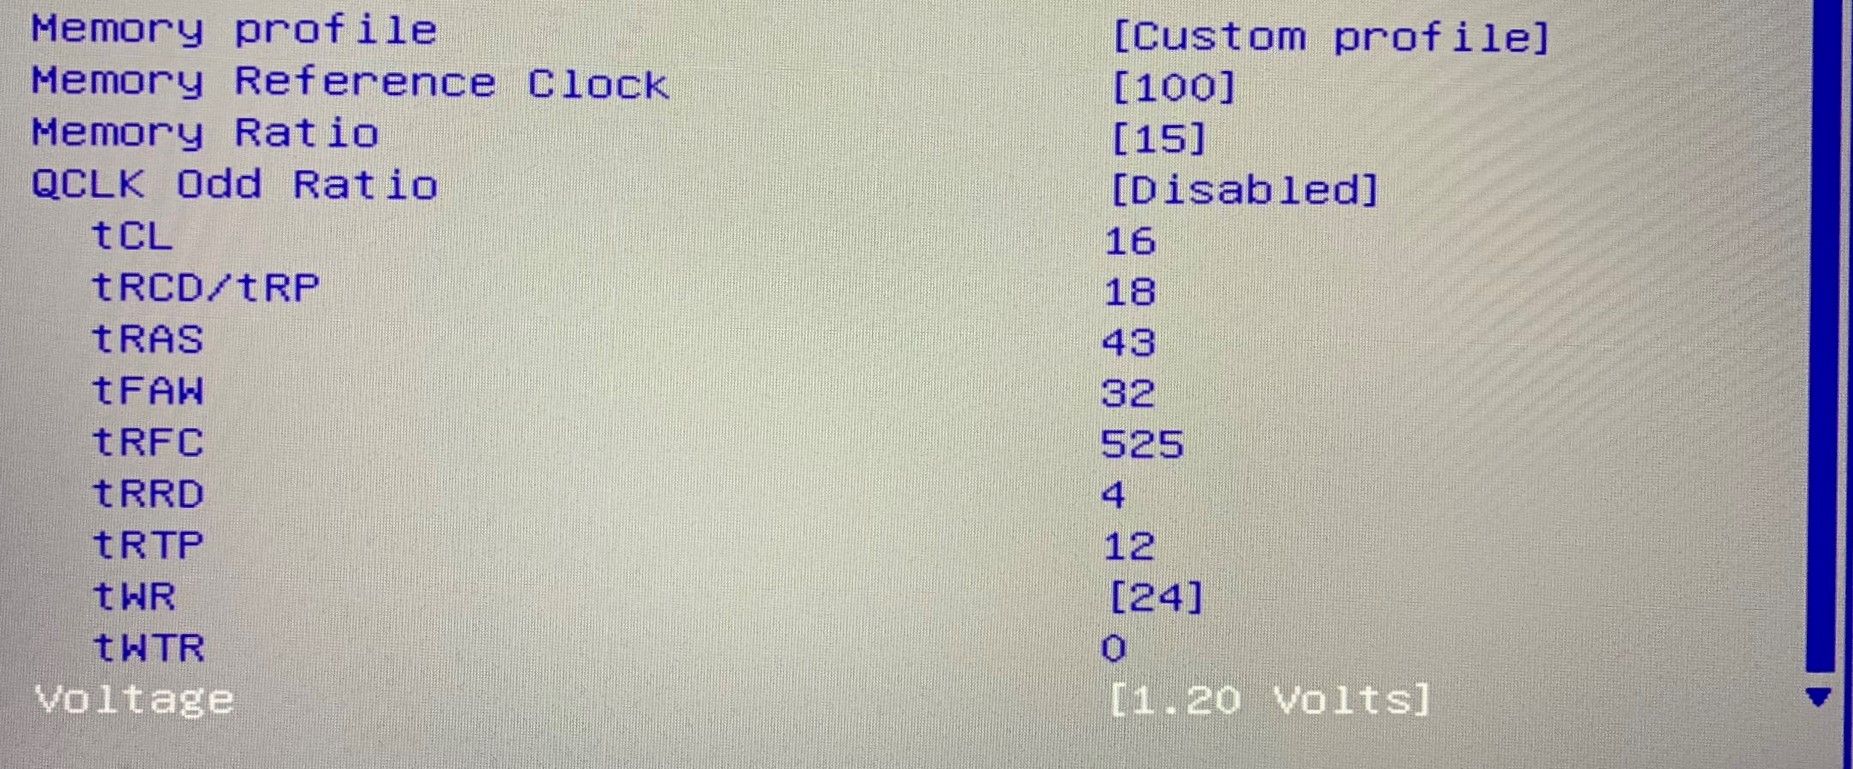 BIOS Custom Profile RAM.JPEG